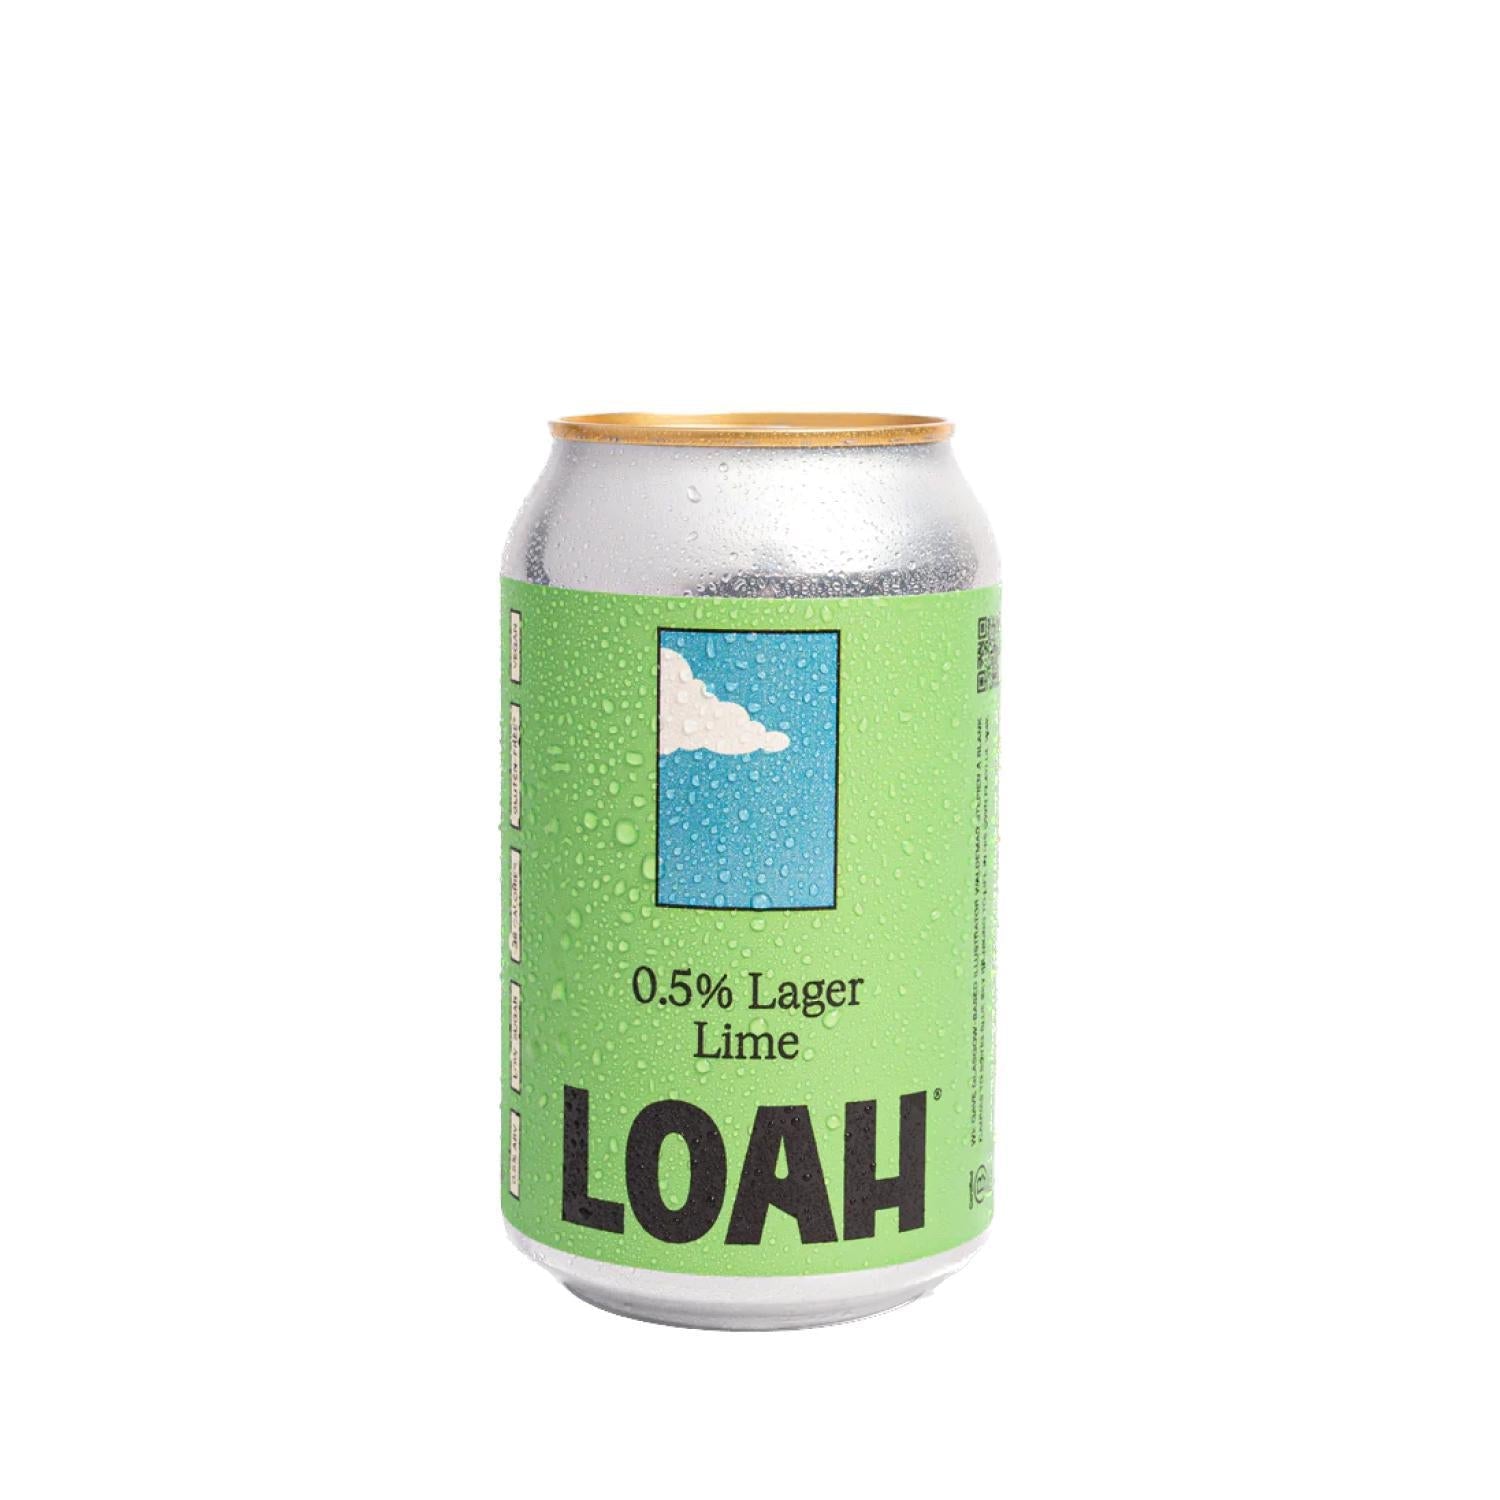 LOAH - Lime Lager